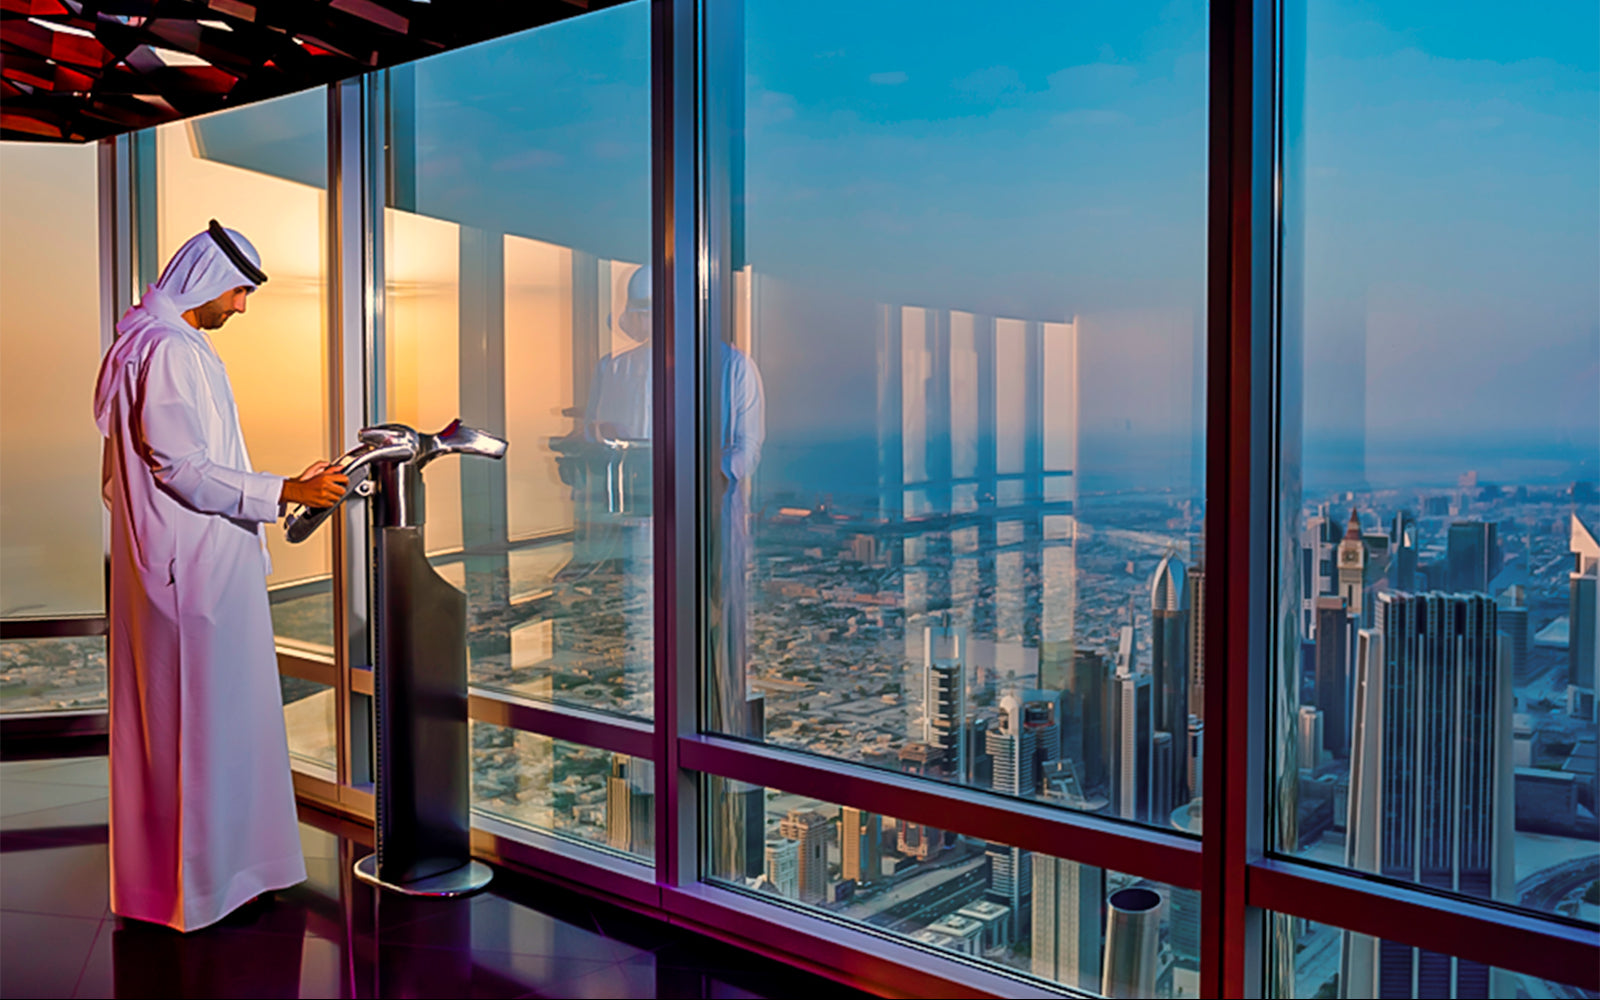 Dubai Combo: Museum Of The Future with Burj Khalifa at the top Tickets - Tripventura